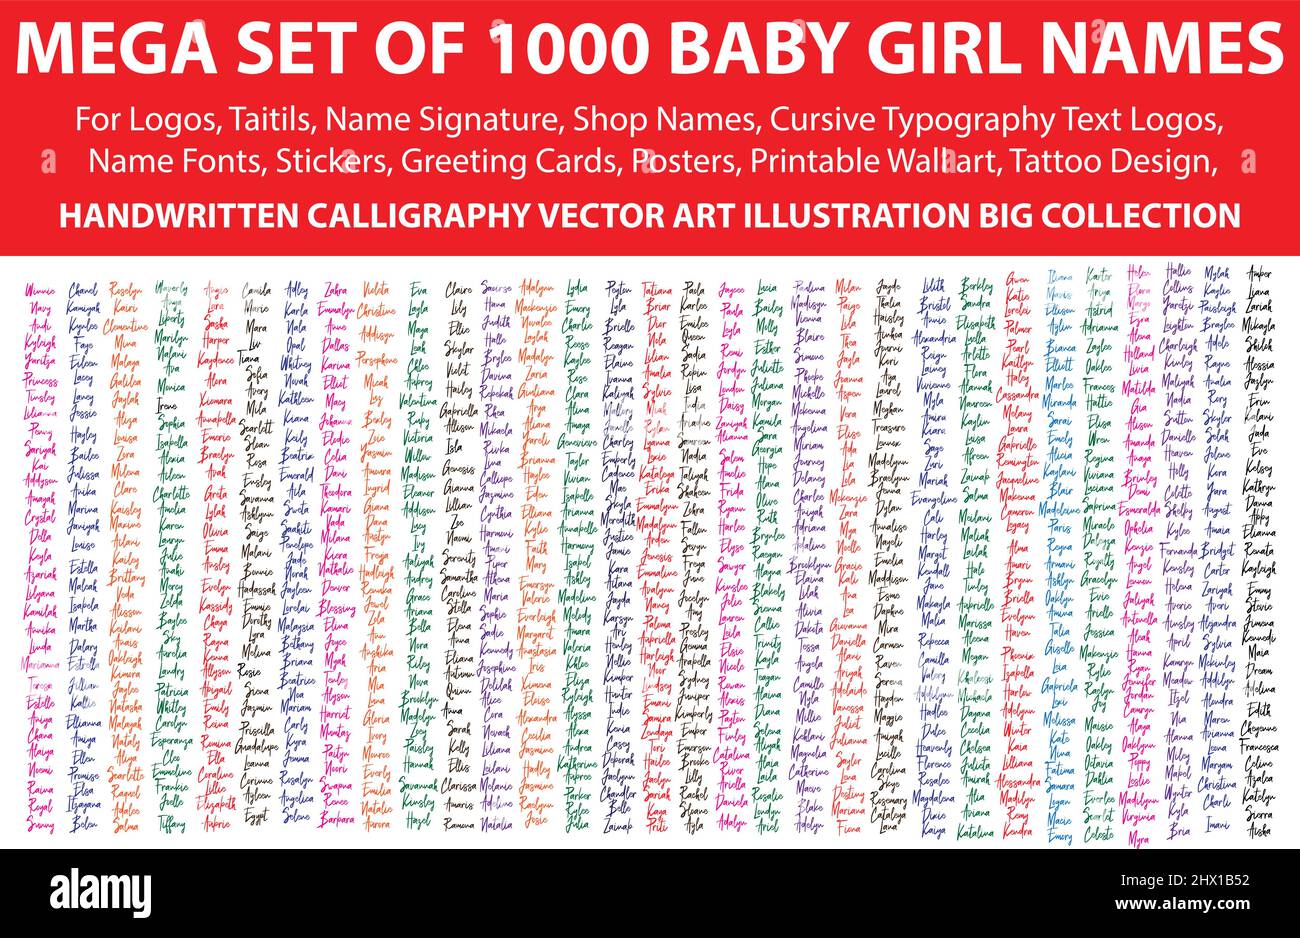 Mega Set mit 1000 Baby Girl Namen für Logos, Namensunterschrift, Shopnamen, Namensschriften, Kursive Typografie Text Logos, Aufkleber, handschriftliche Kalligraphie Stock Vektor